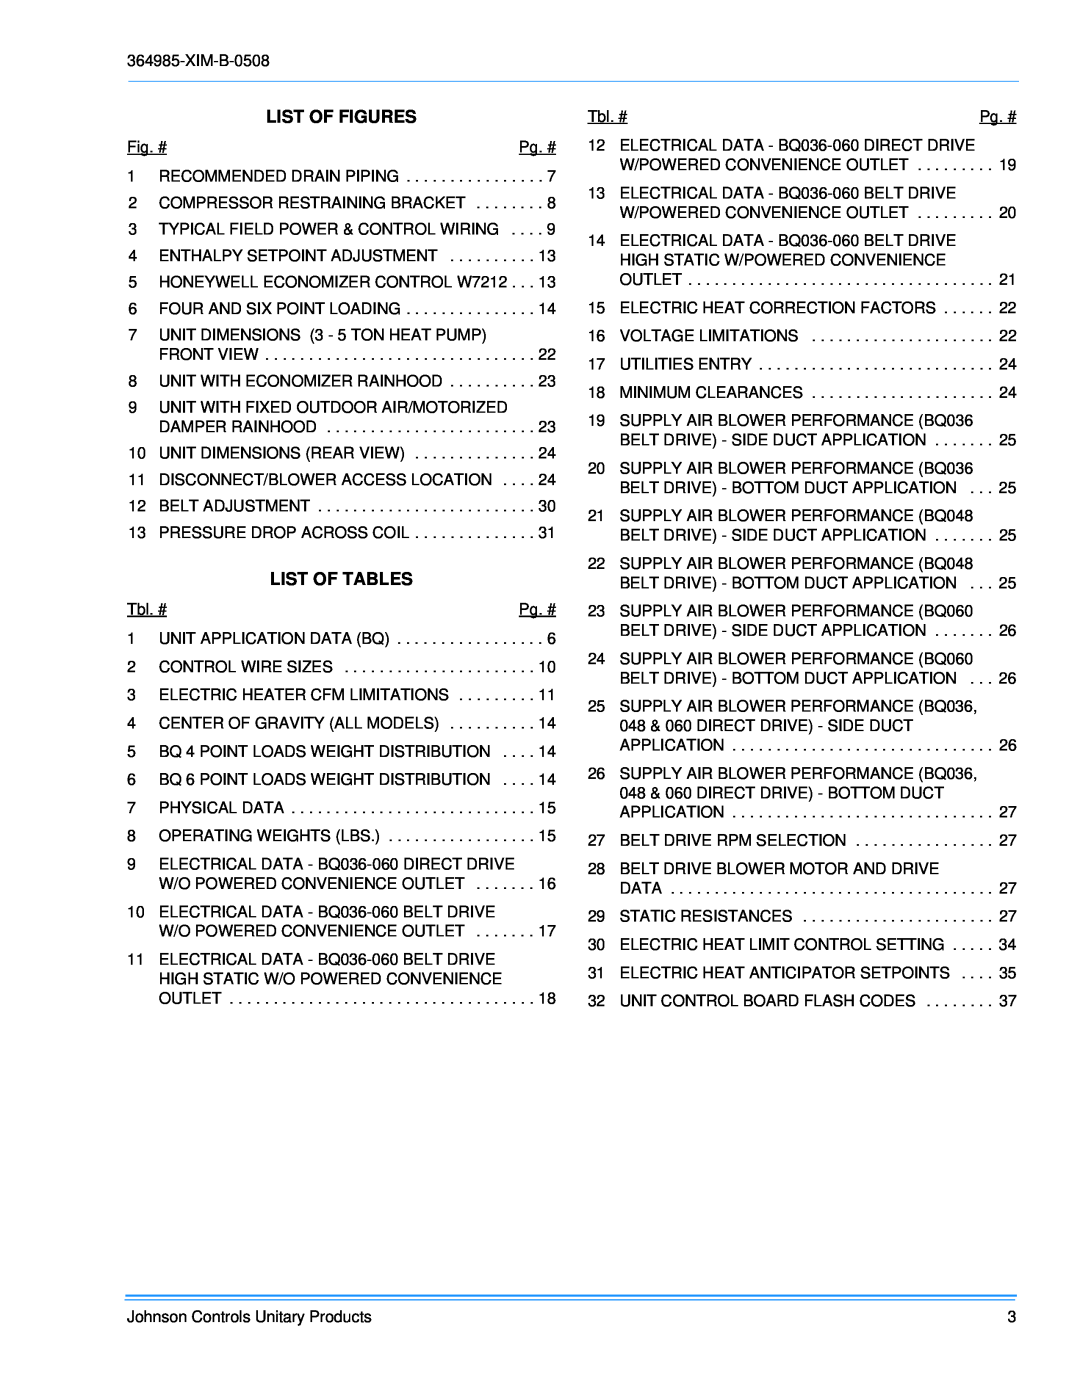 Johnson Controls BQ 060, BQ 036, BQ 048 installation manual List Of Figures, List Of Tables 